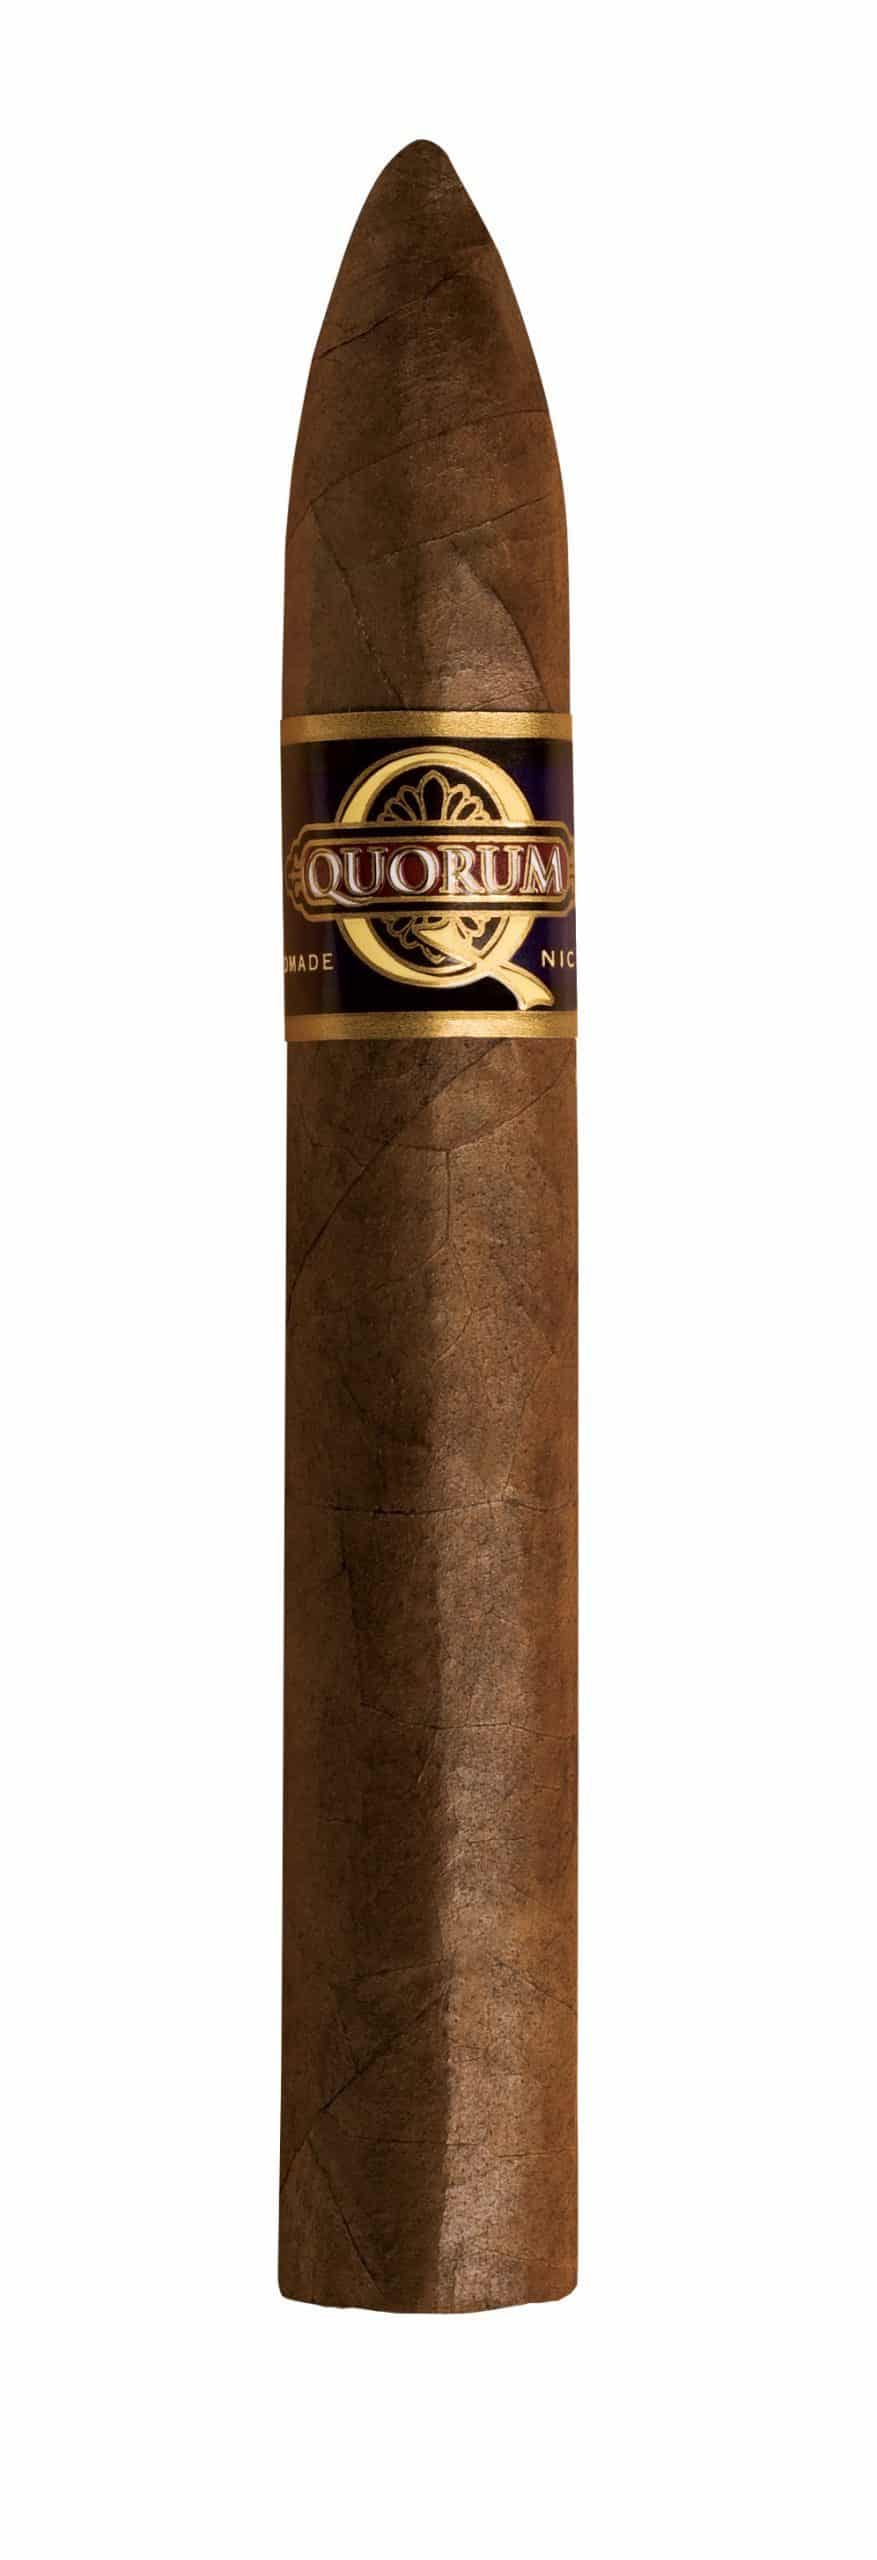 quorum torpedo single cigar